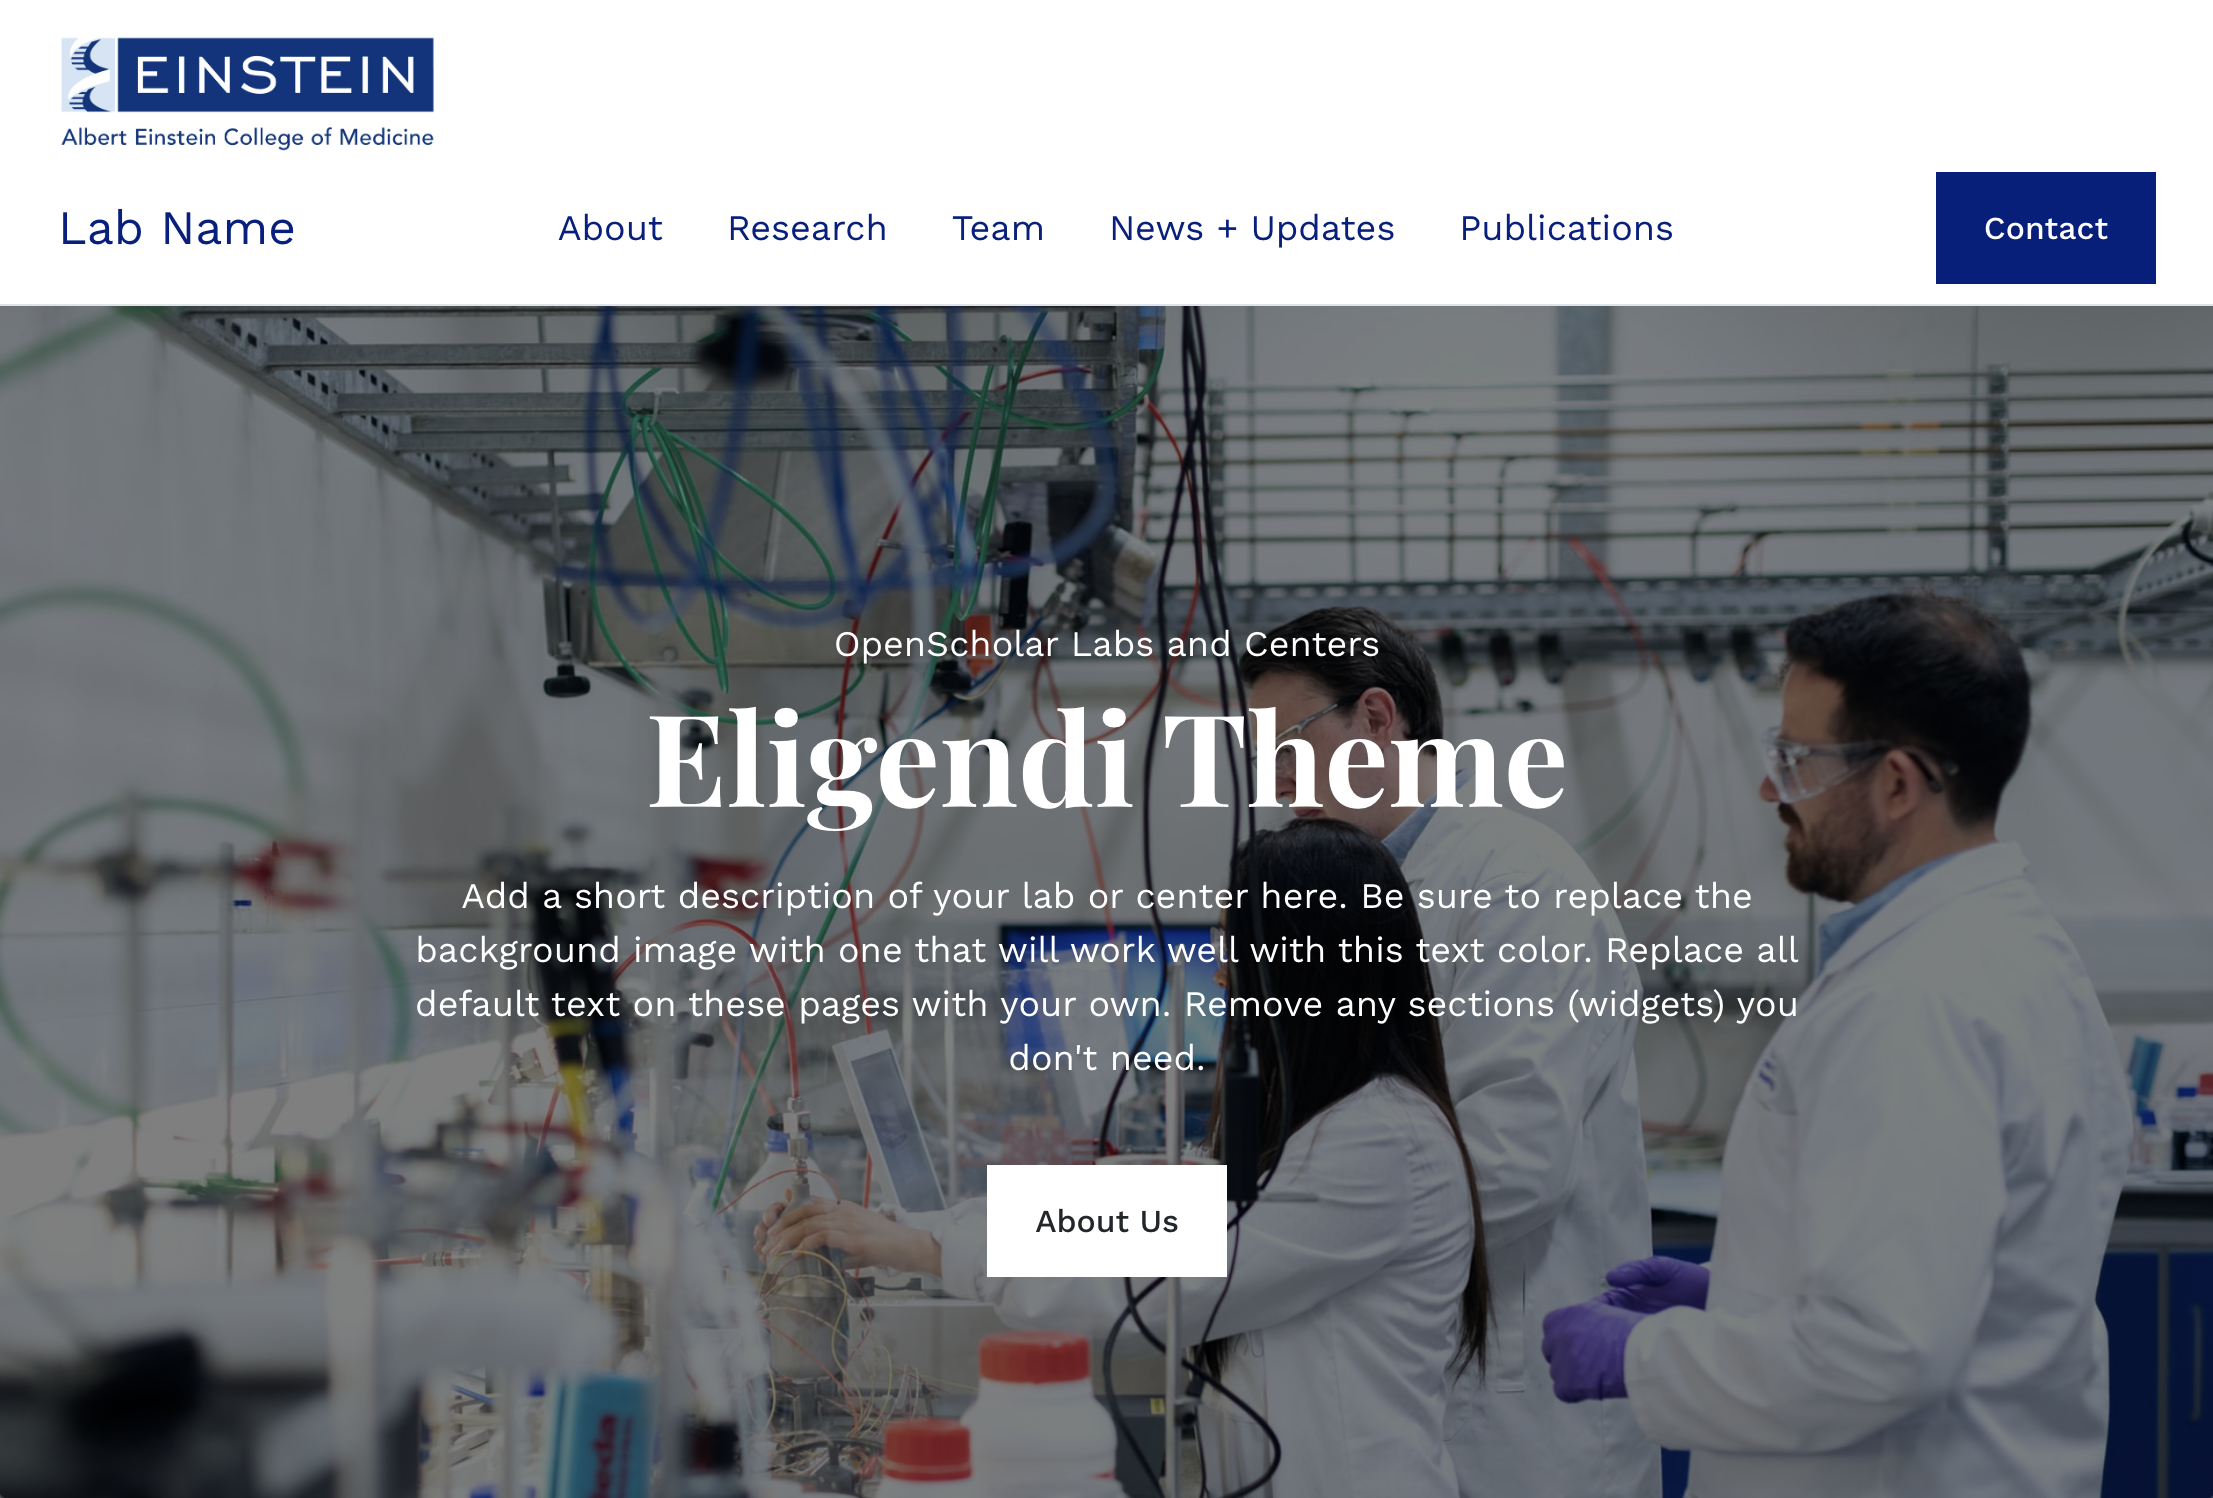 Screenshot of Eligendi theme